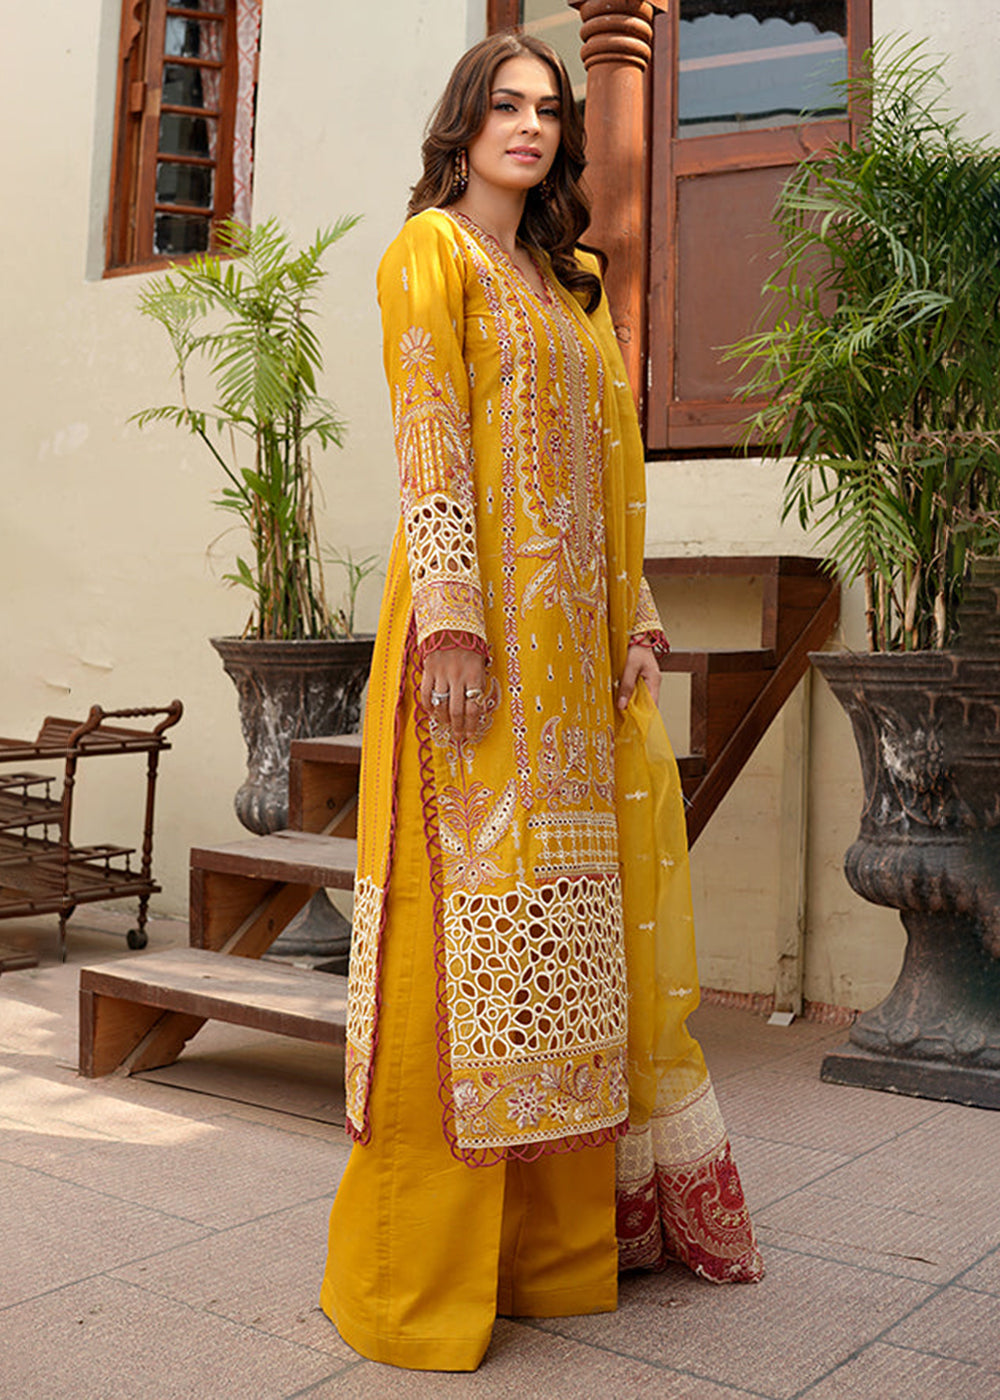 Buy Now Yellow Lawn Dress - Bahaar Luxury Lawn by Mariyam's - Lara B-1017 Online in USA, UK, Canada & Worldwide at Empress Clothing.